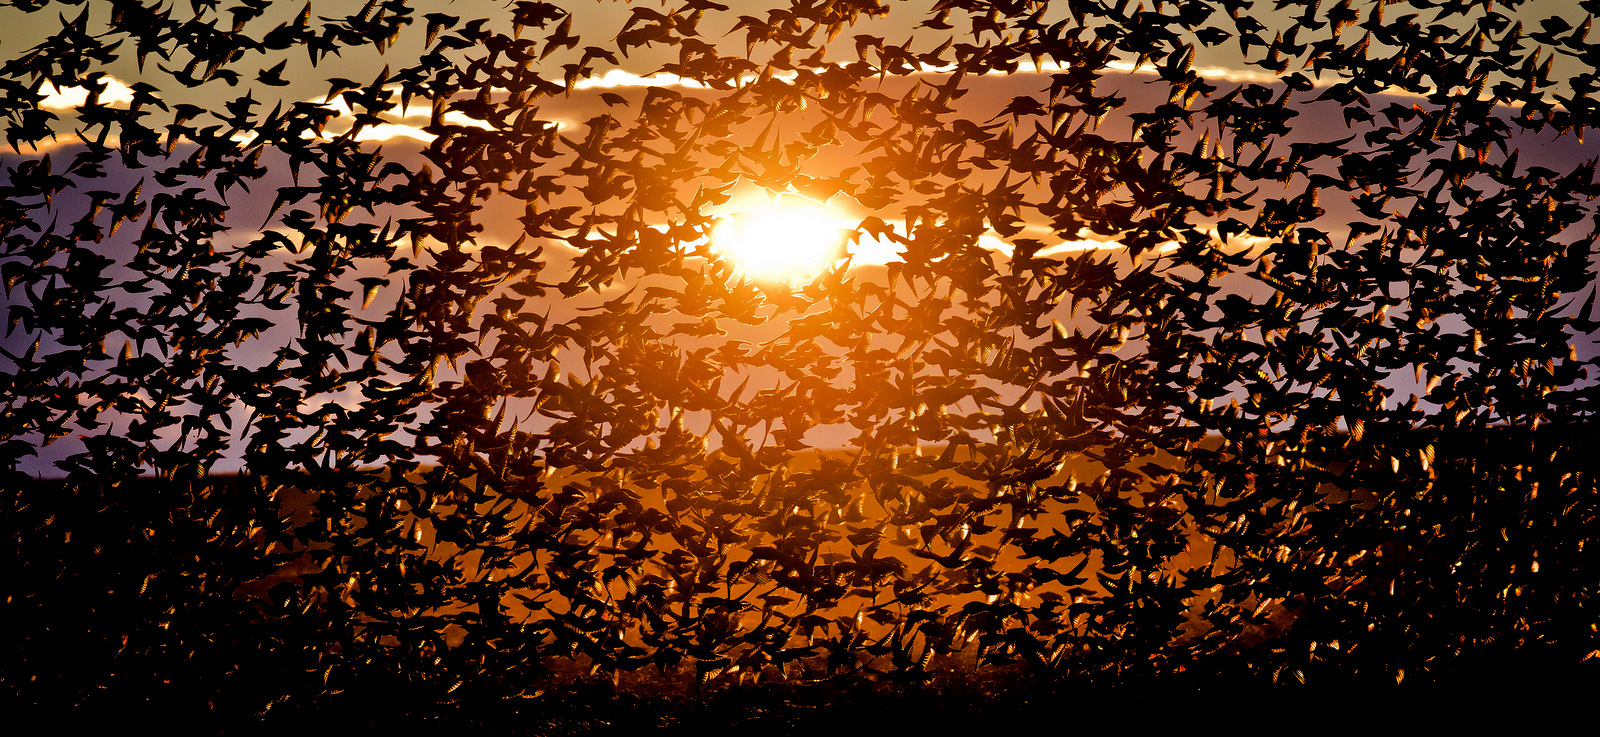 A large flock of starlings fly illuminated by the setting sun near Bacau, north eastern Romania, Dec. 10, 2013. (AP/Vadim Ghirda)